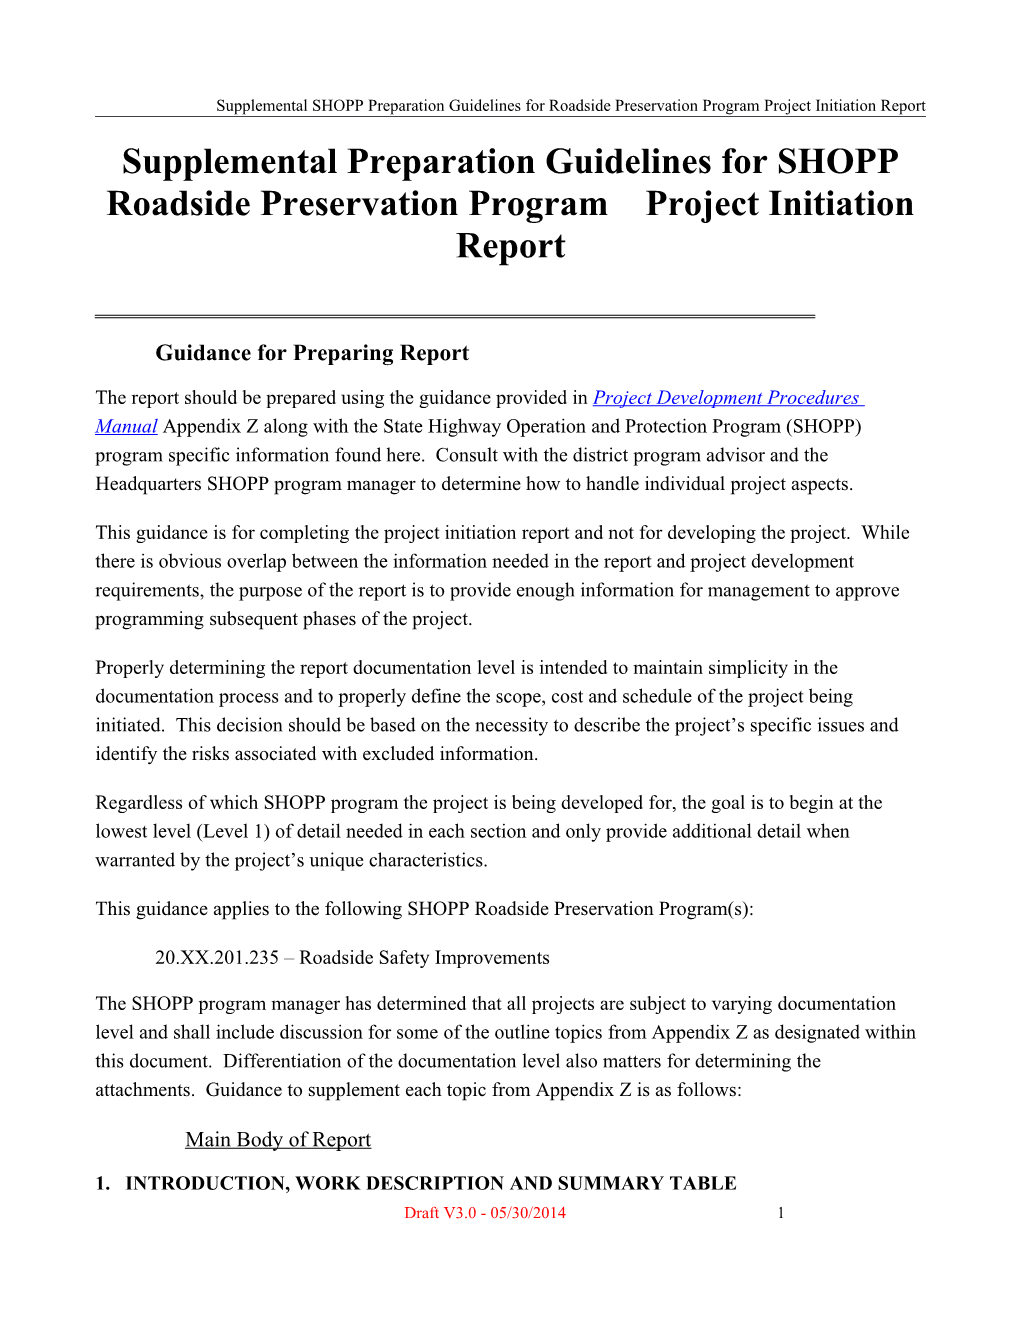 Supplemental SHOPP Preparation Guidelines for Roadside Preservationprogram Project Initiation